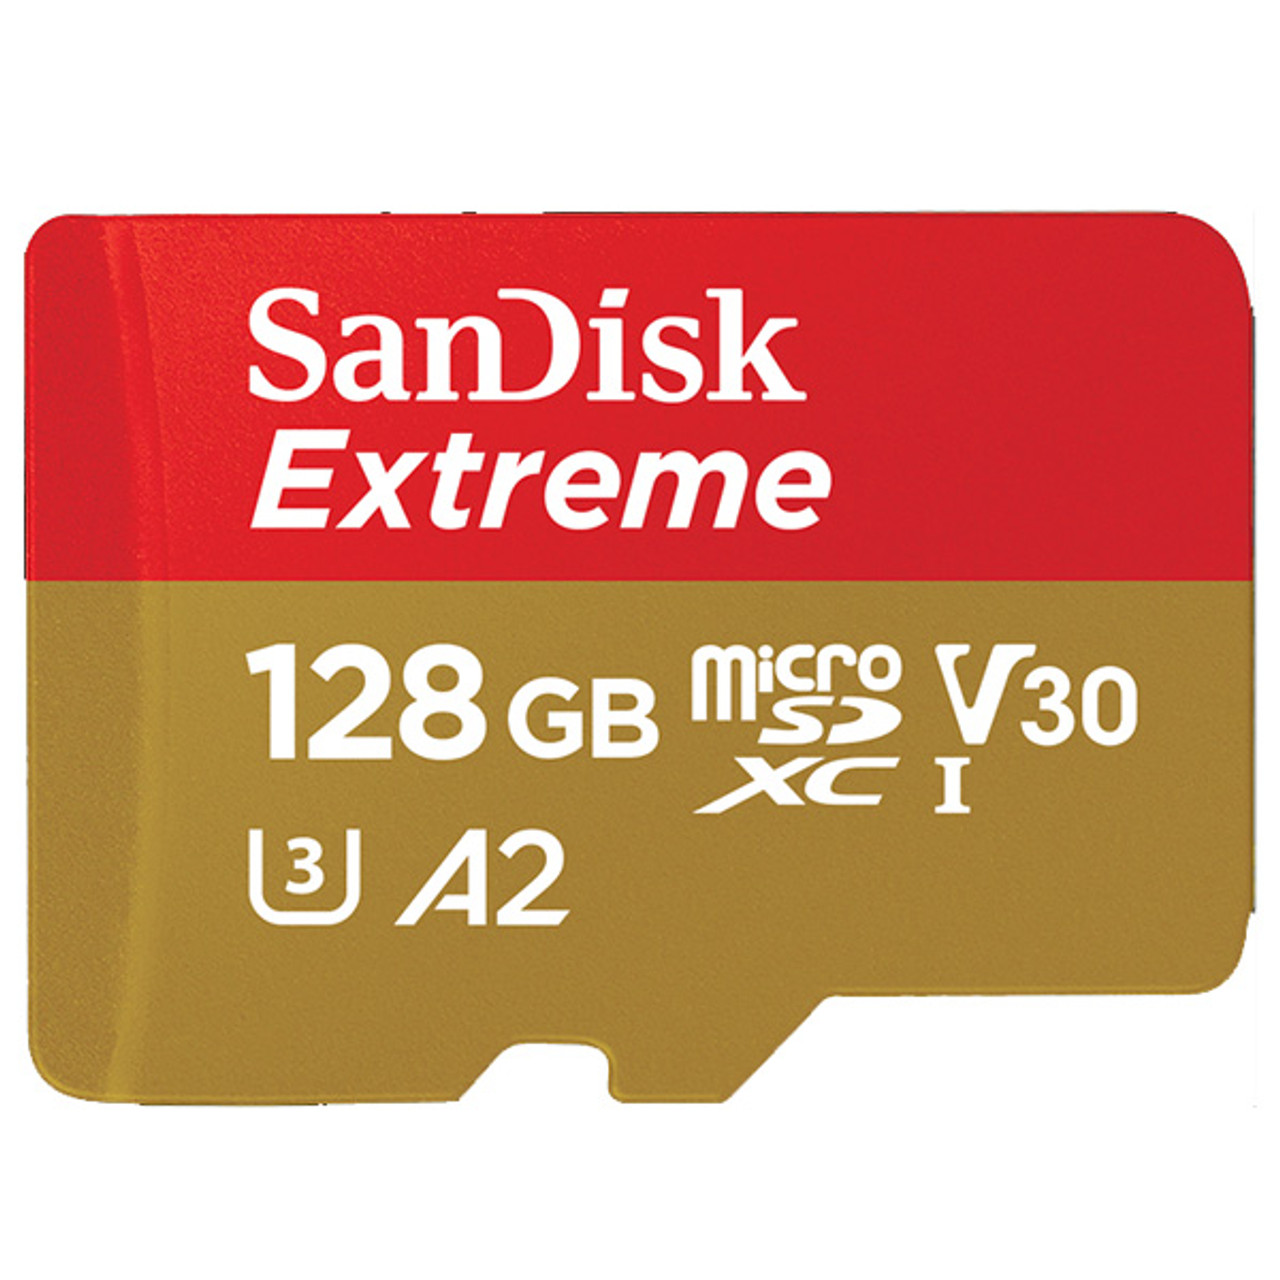 Sandisk Extreme 128GB Micro SD UHS-I 160-90bm/s U3 V30